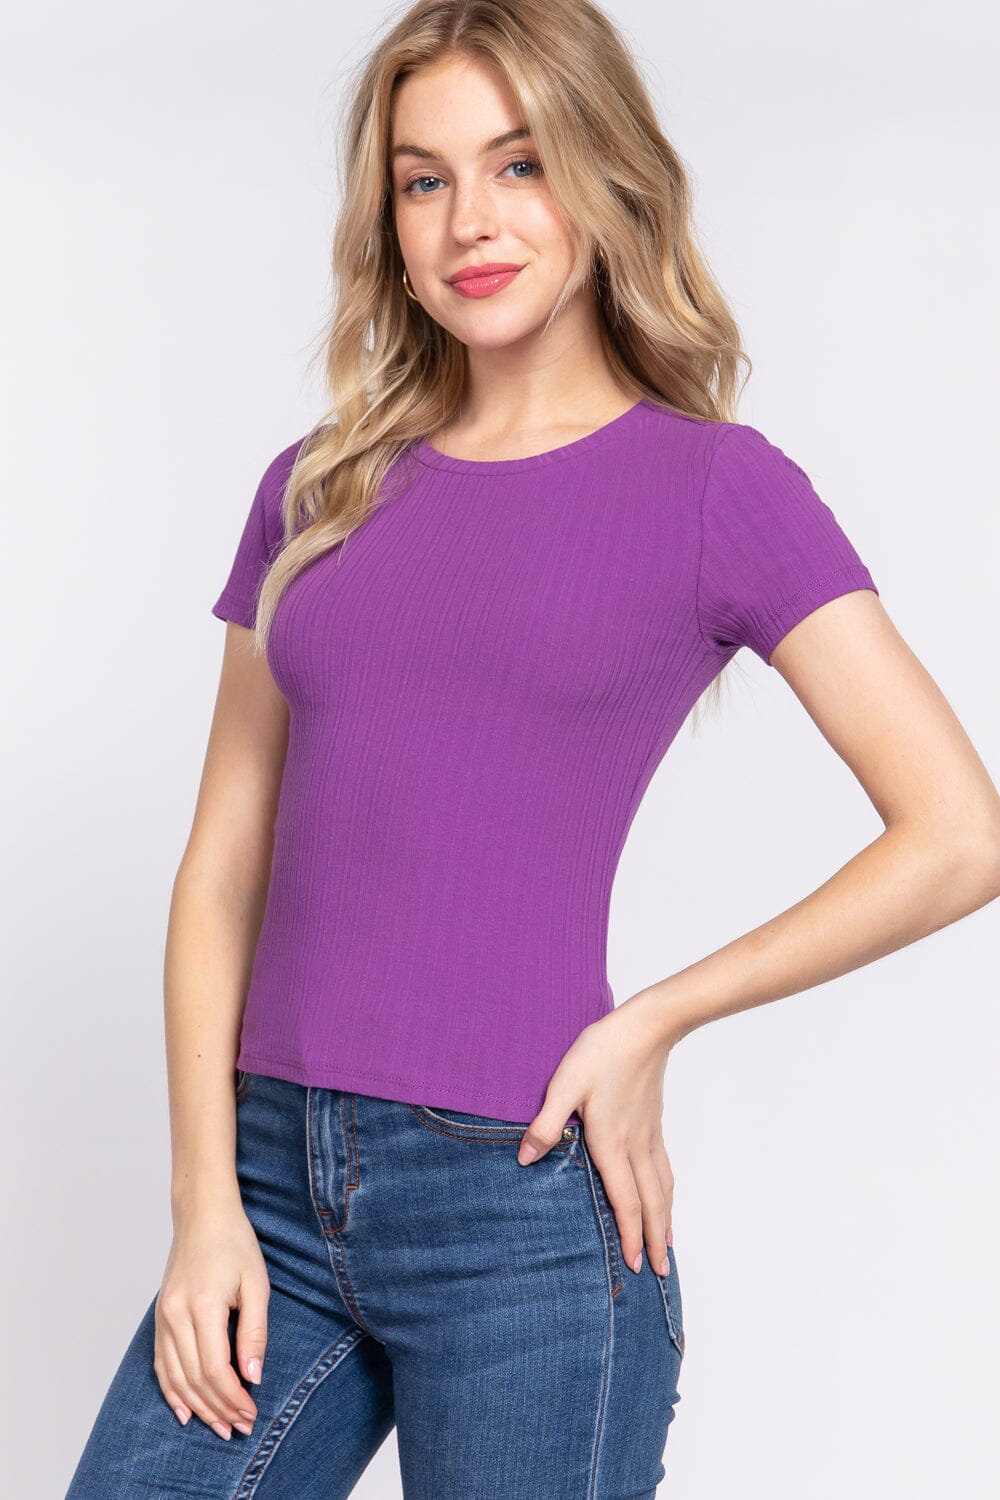 Purple Basic Casual Short Sleeve Crew Neck Variegated Rib Knit Top Shirts & Tops jehouze 